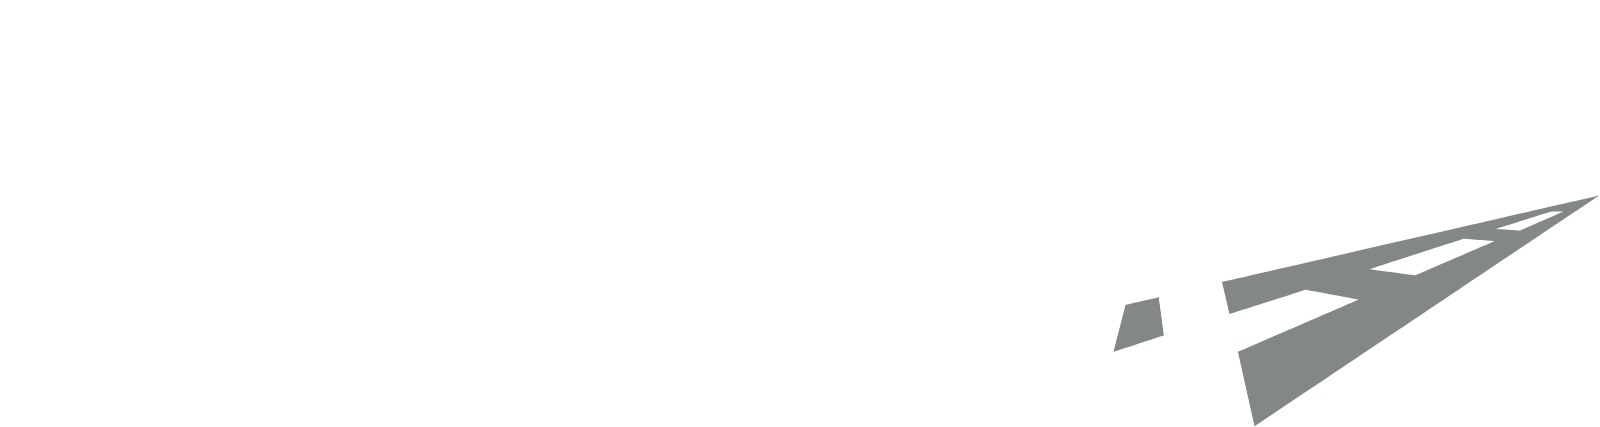 Atlas Arteria Logo groß für dunkle Hintergründe (transparentes PNG)